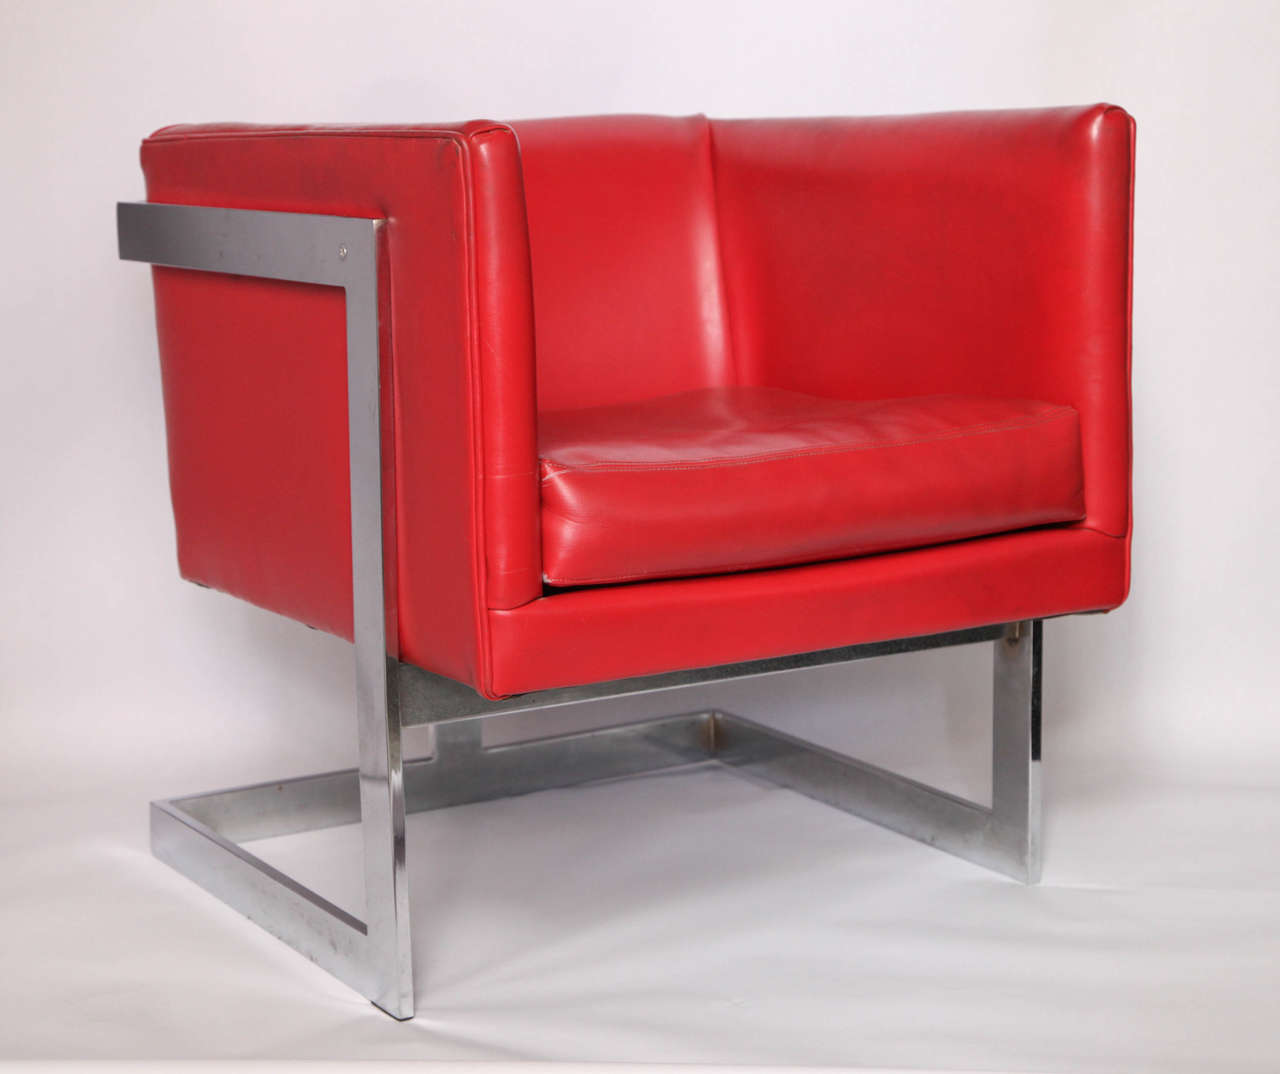 A 1970s modernist cube chair by Milo Baughman.